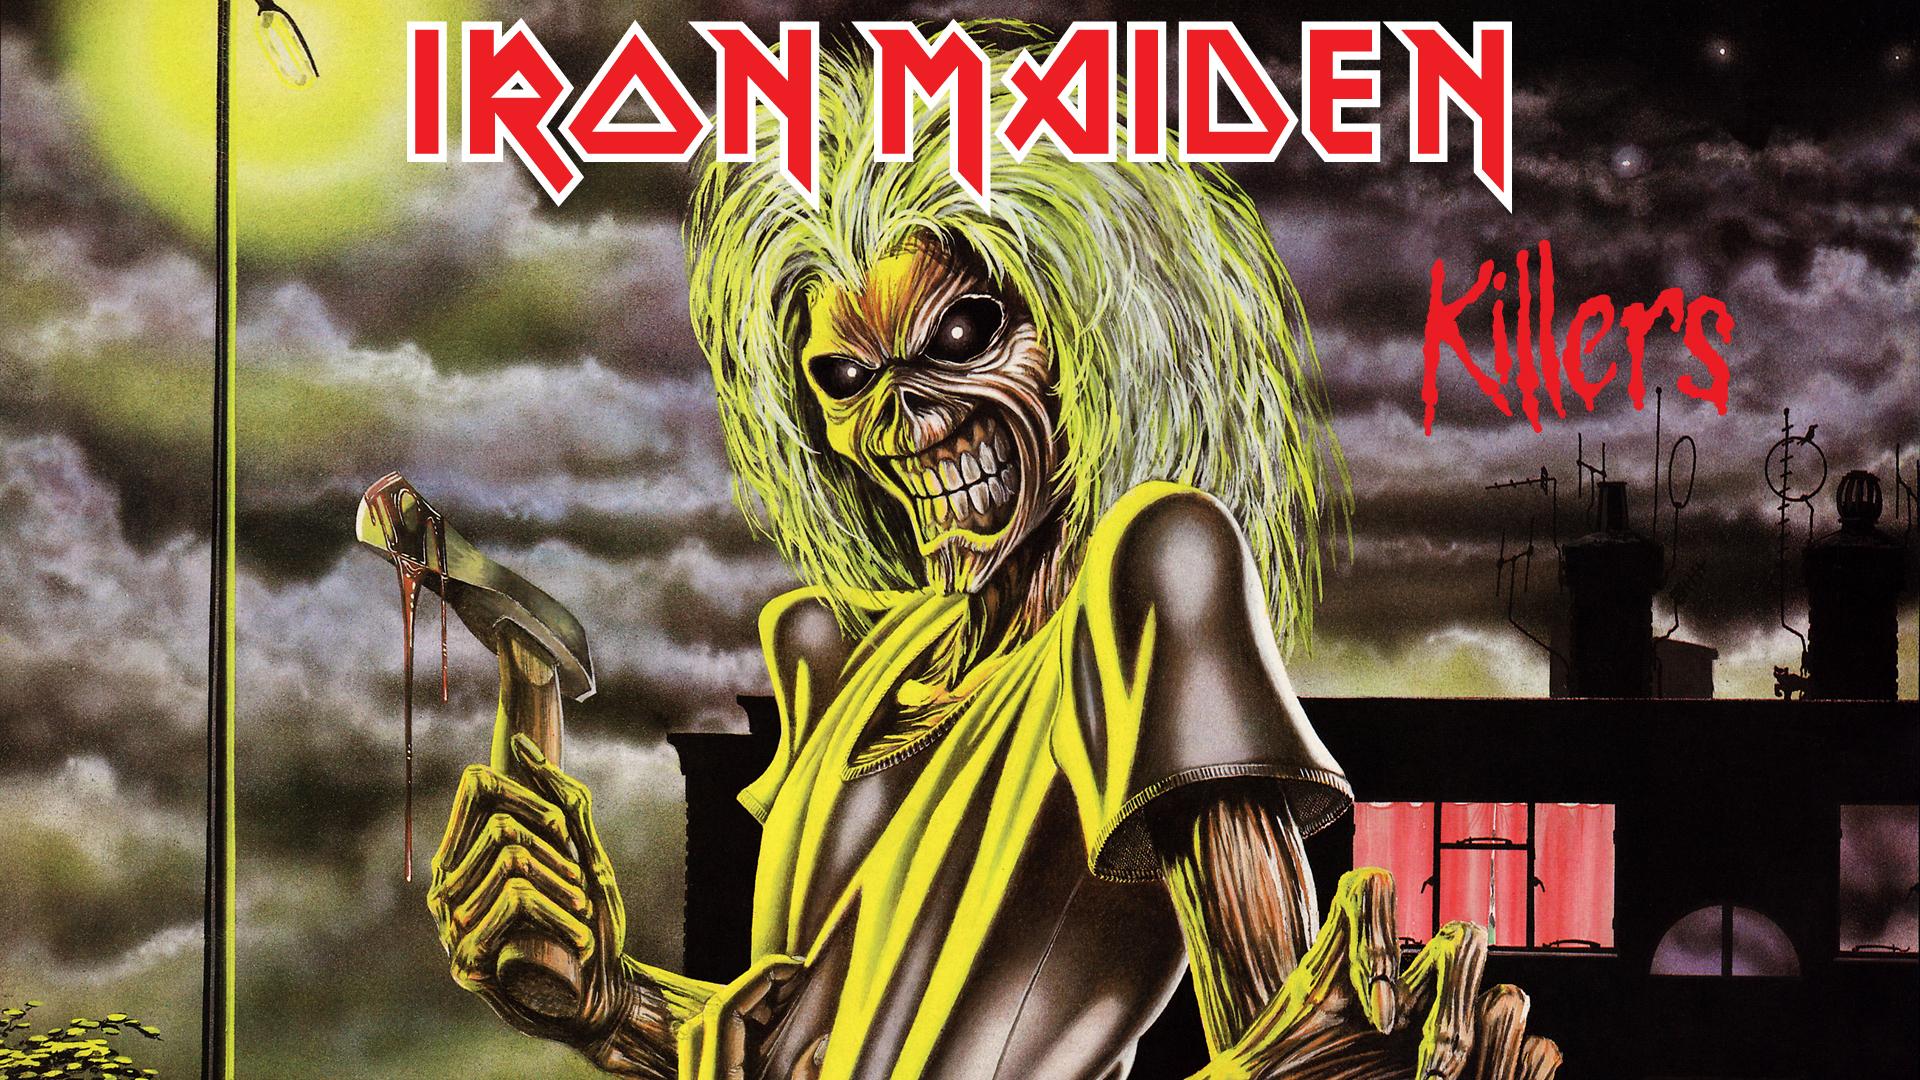 50+] Iron Maiden Wallpaper 1920x1080 - WallpaperSafari